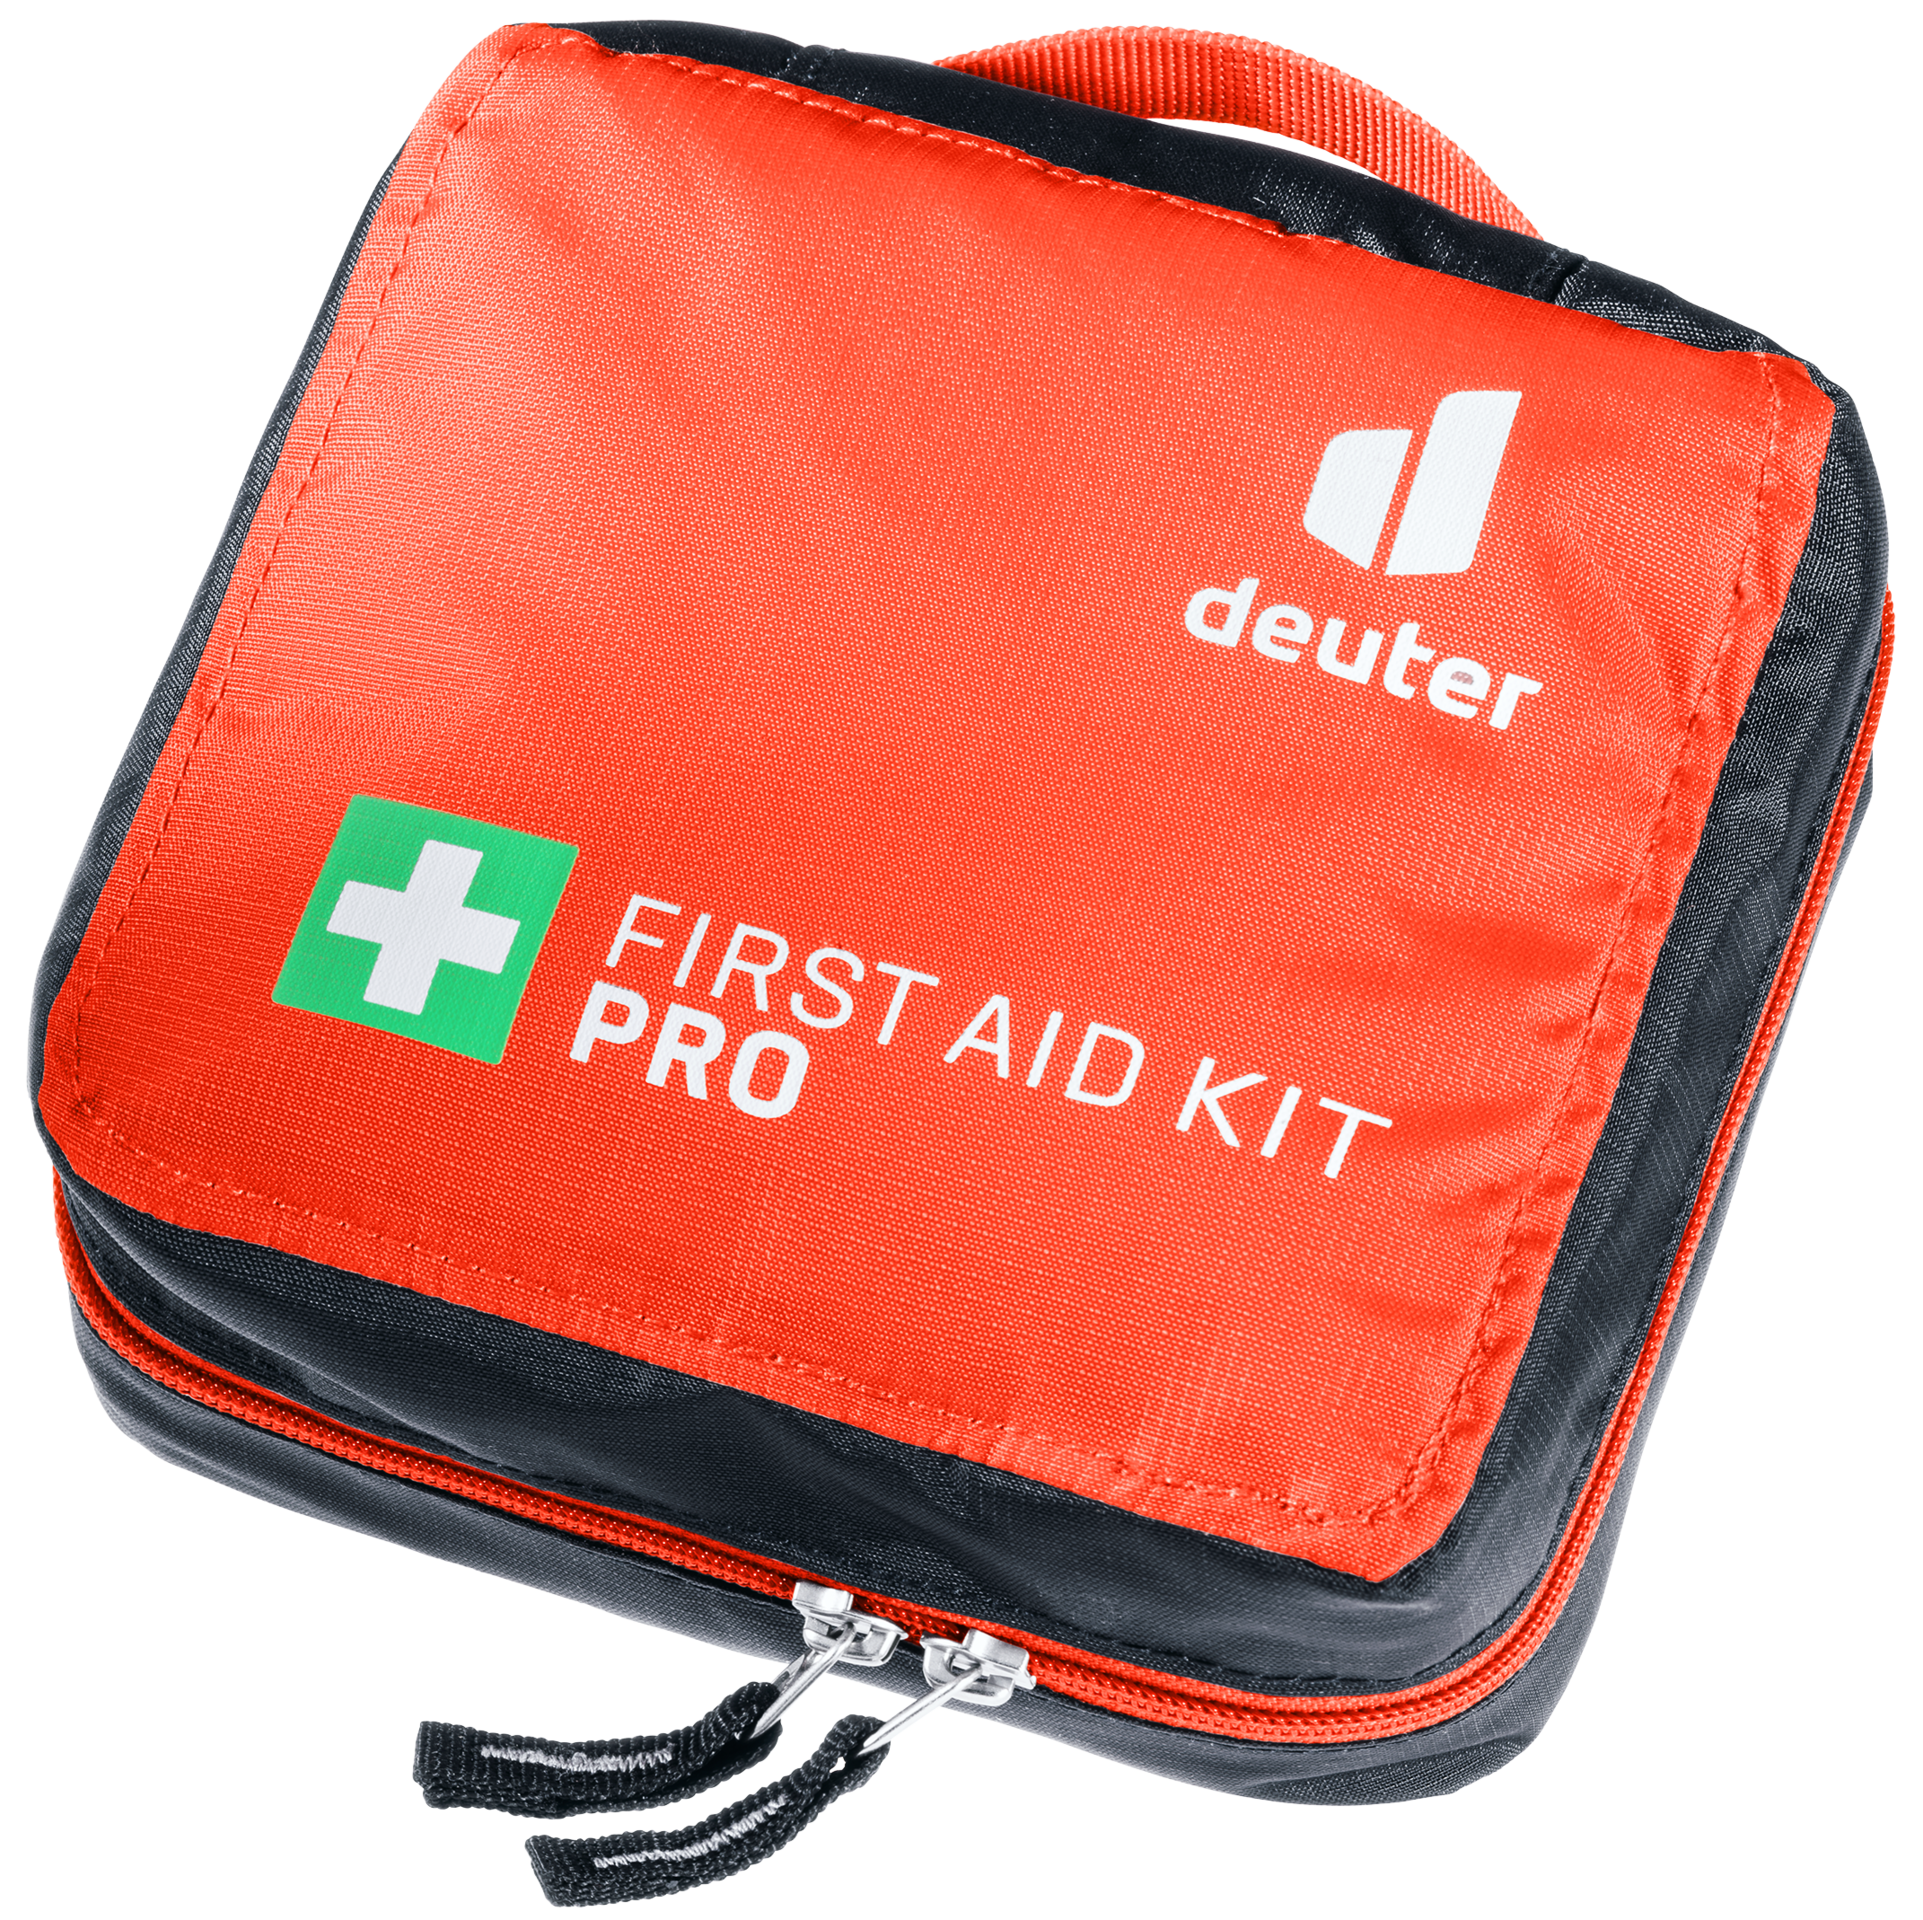 deuter First Aid Kit Pro